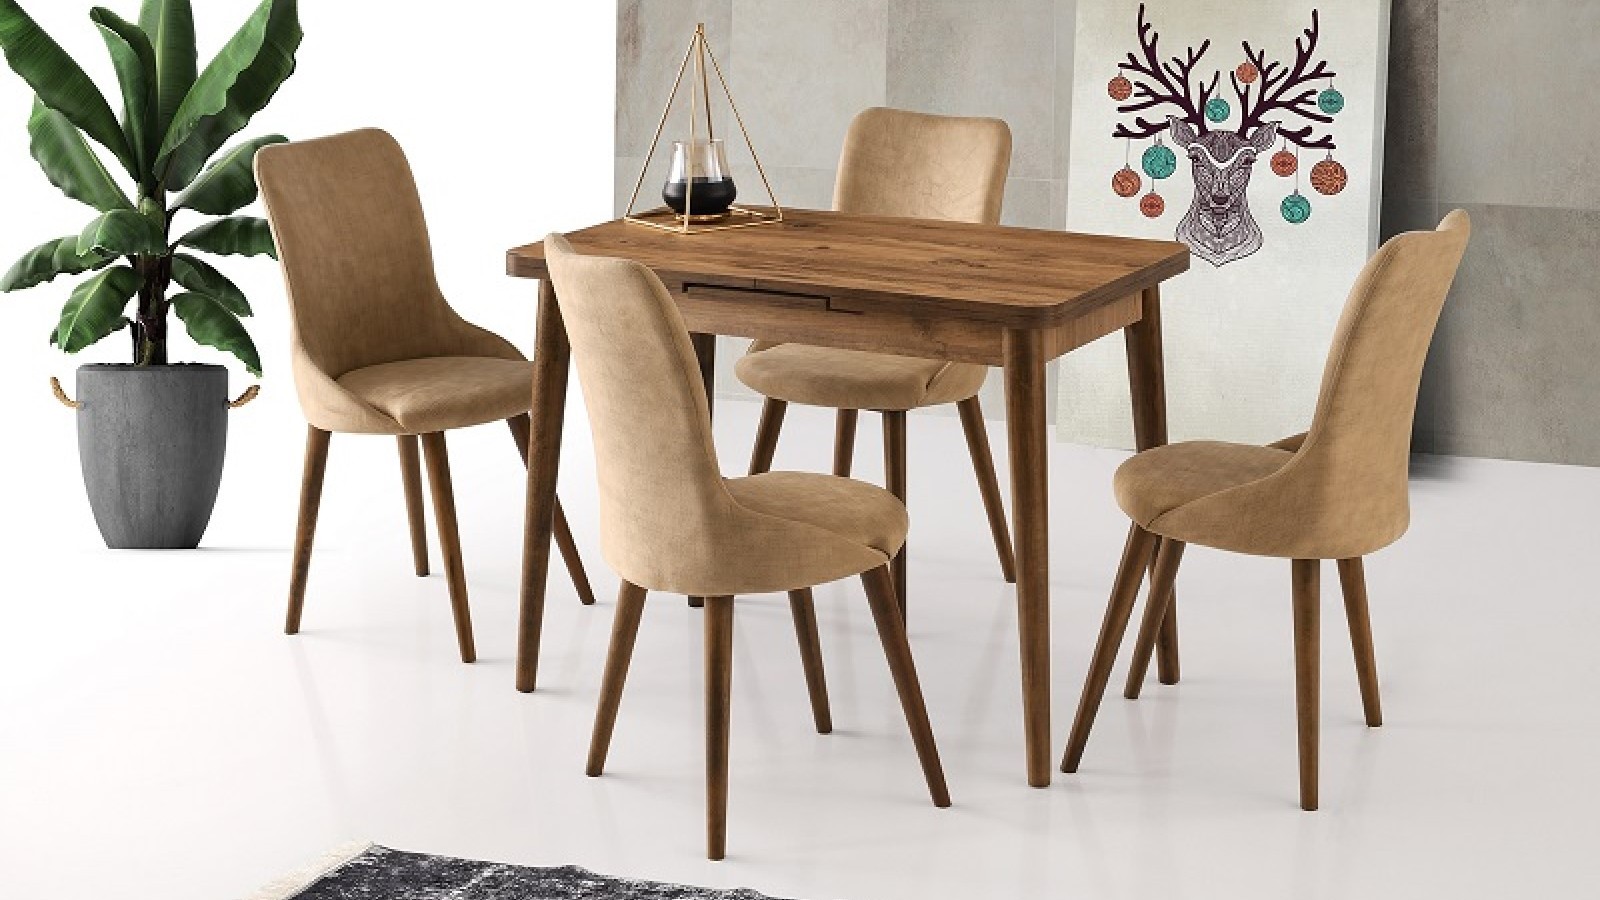 Silva Table Ash 100x60 cm ve İnci Chair